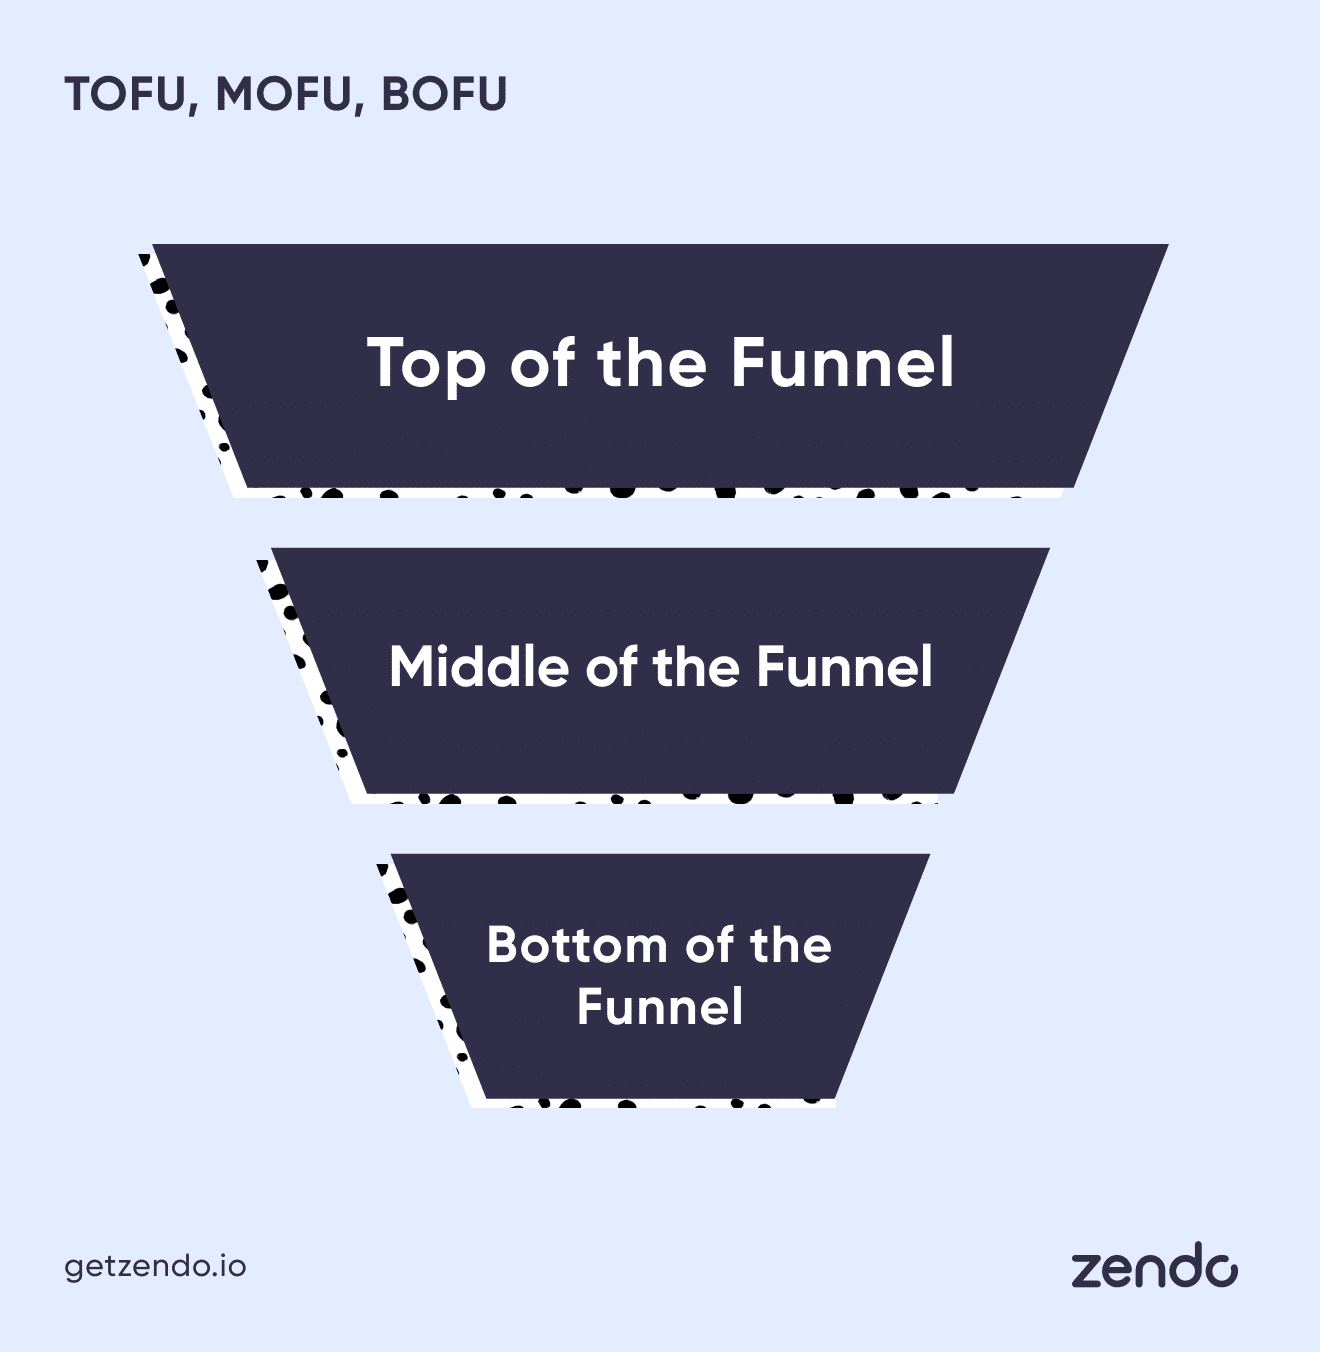 TOFU, MOFU, BOFU: Top of the Funnel, Middle of the Funnel, Bottom of the Funnel.